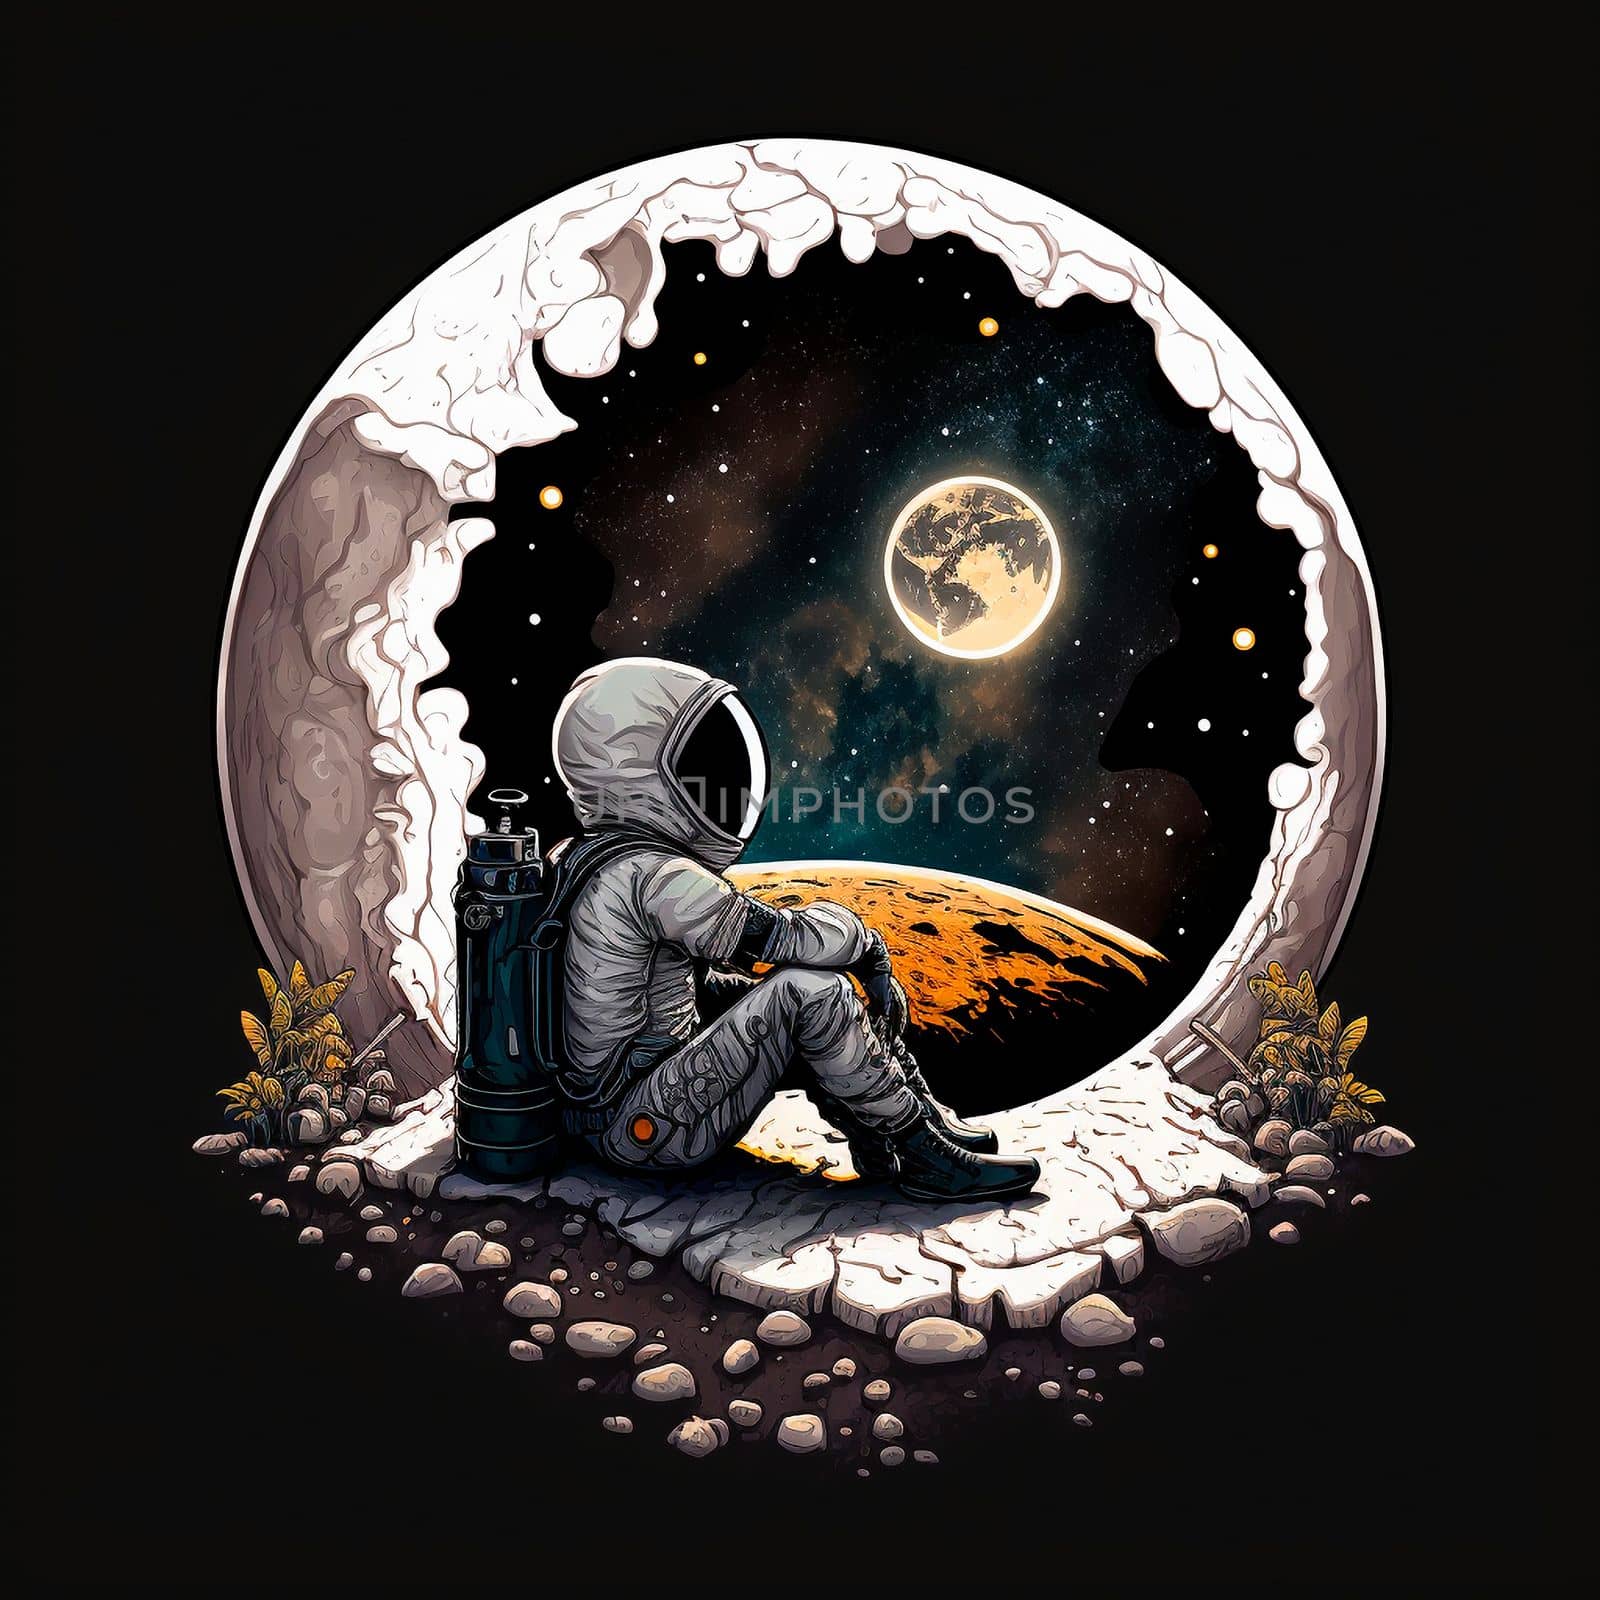 Cartoon image of an astronaut sitting on a moon by NeuroSky